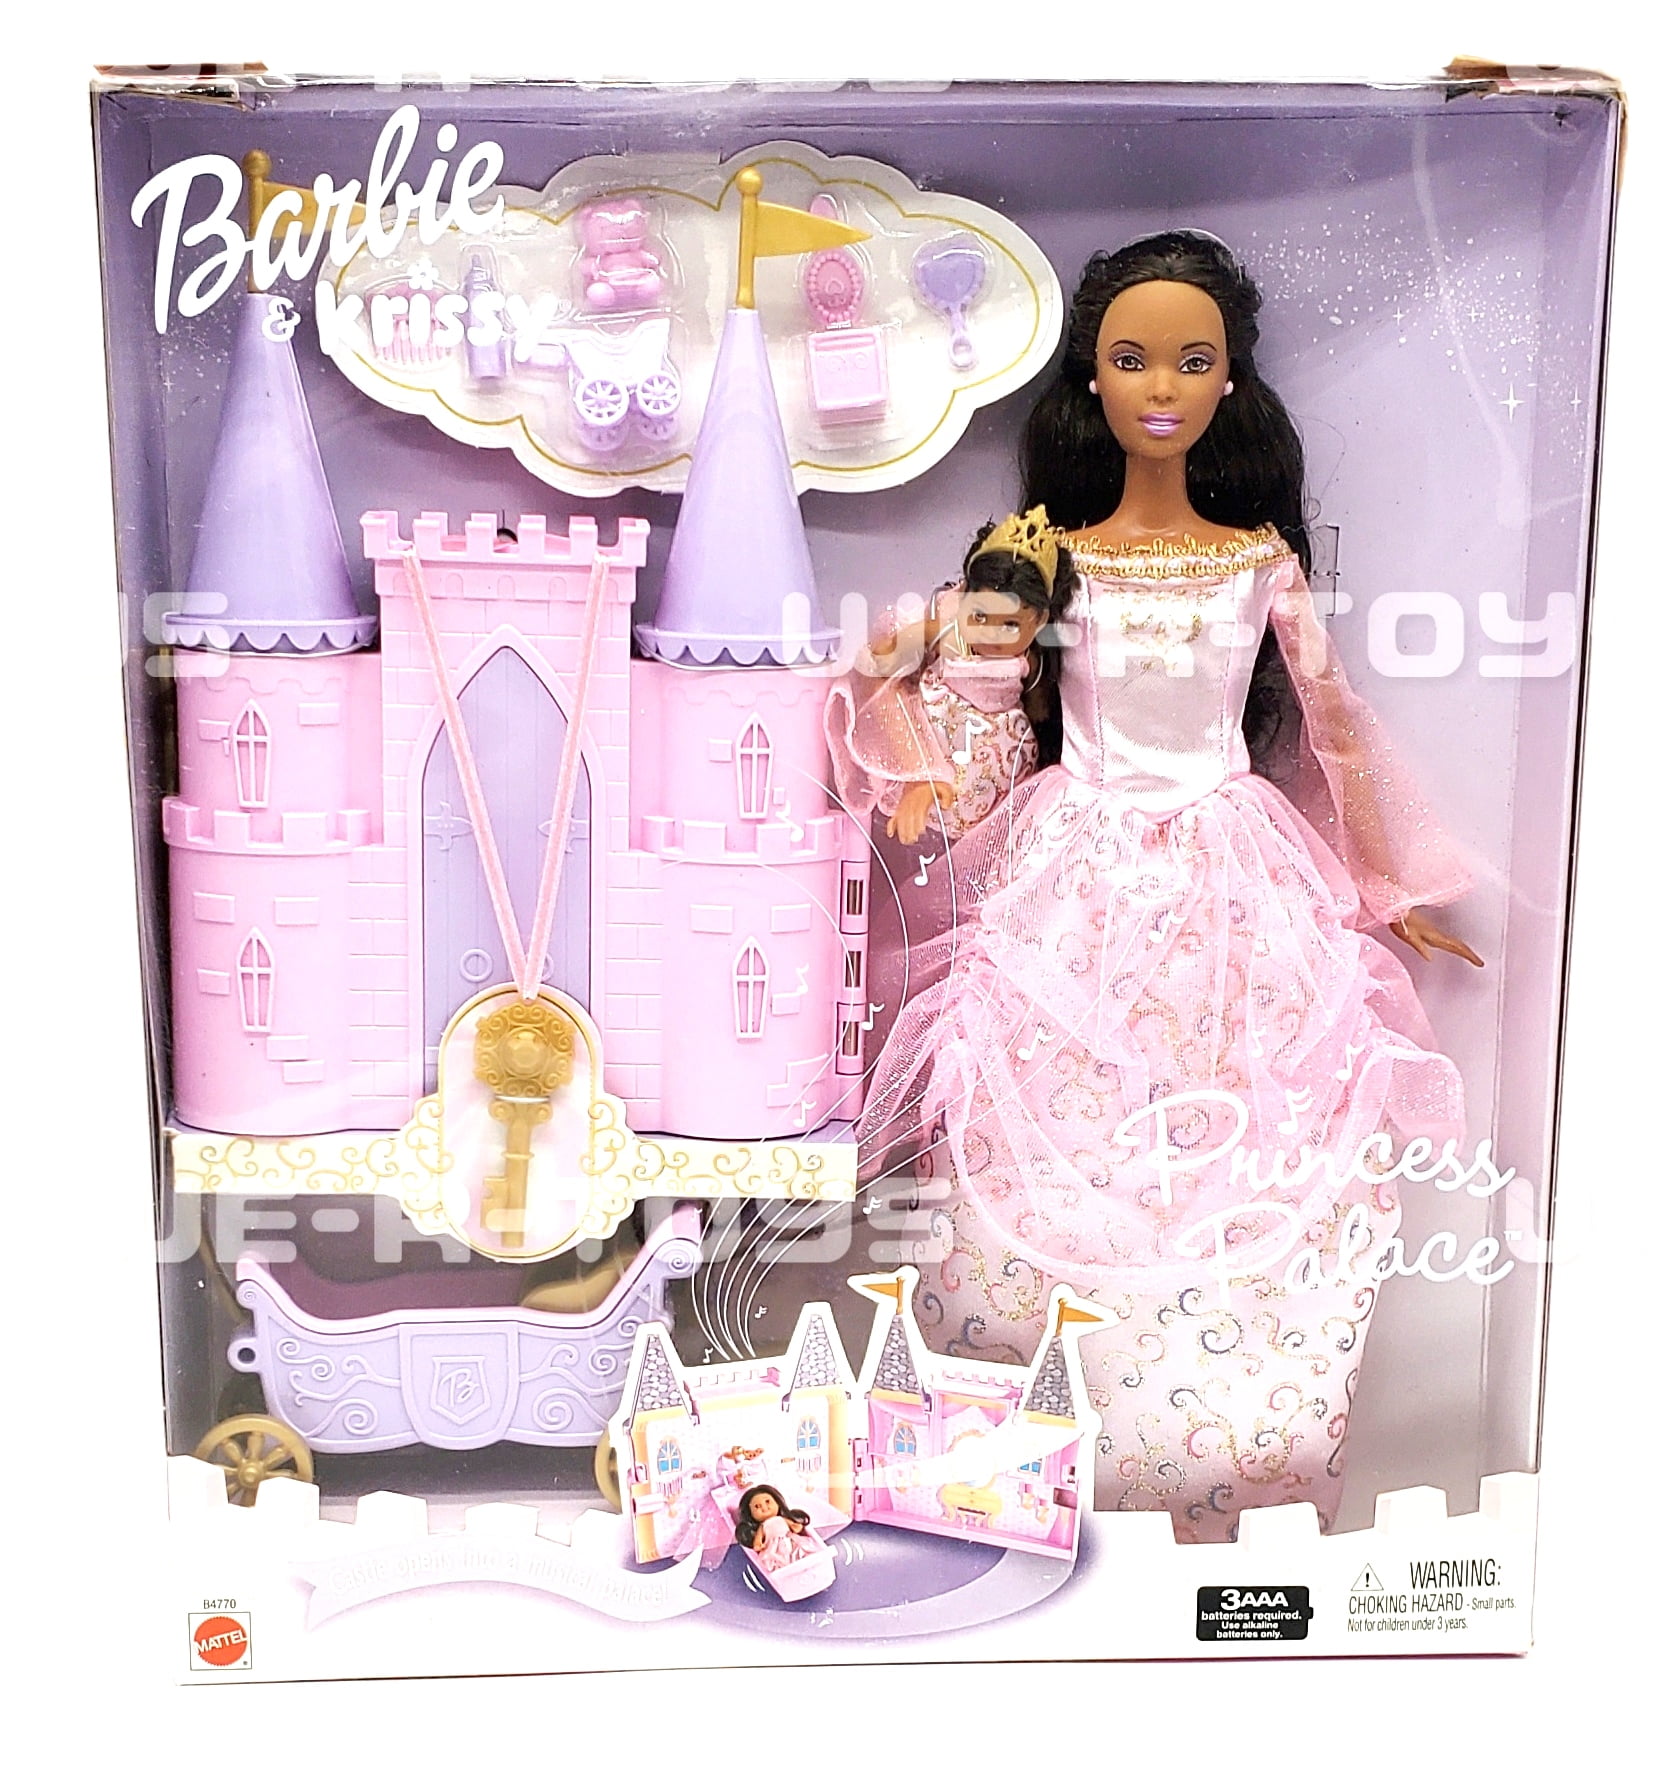 Barbie & Krissy Princess Palace Dolls Mattel 2003 No. 4770 NRFB